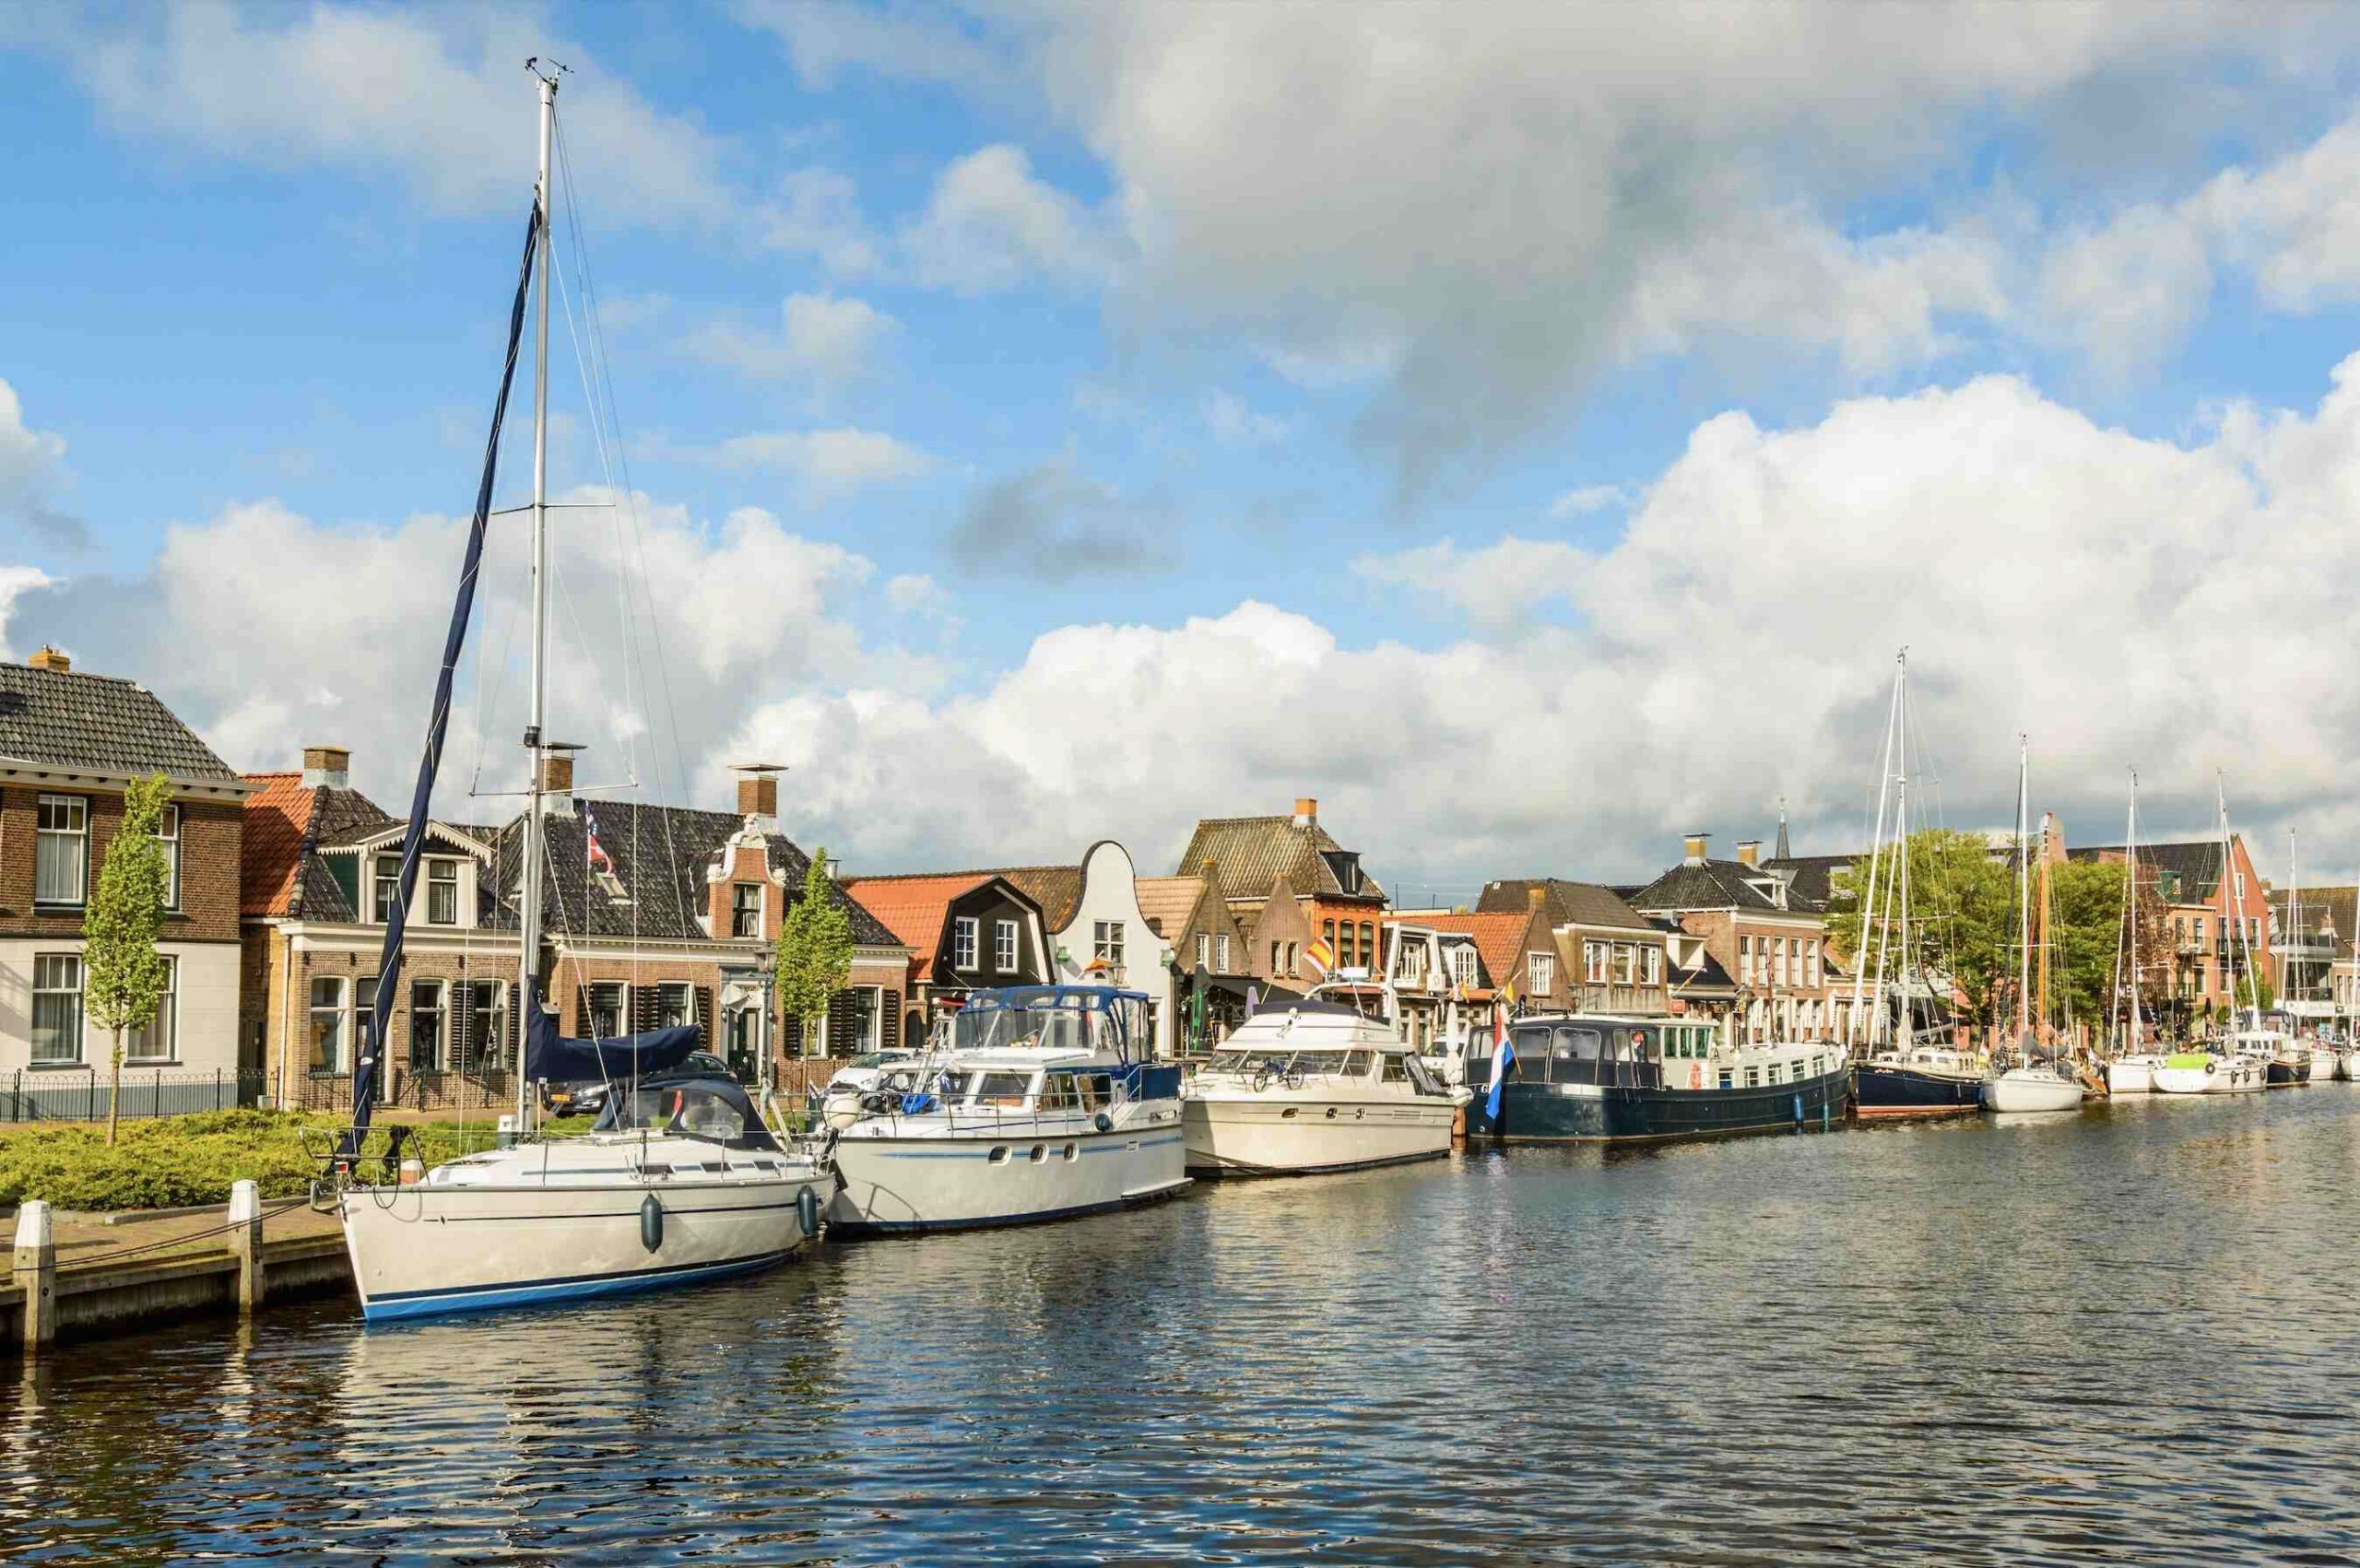 Hoe je je boot snel verkoopt op Botentekoop.nl